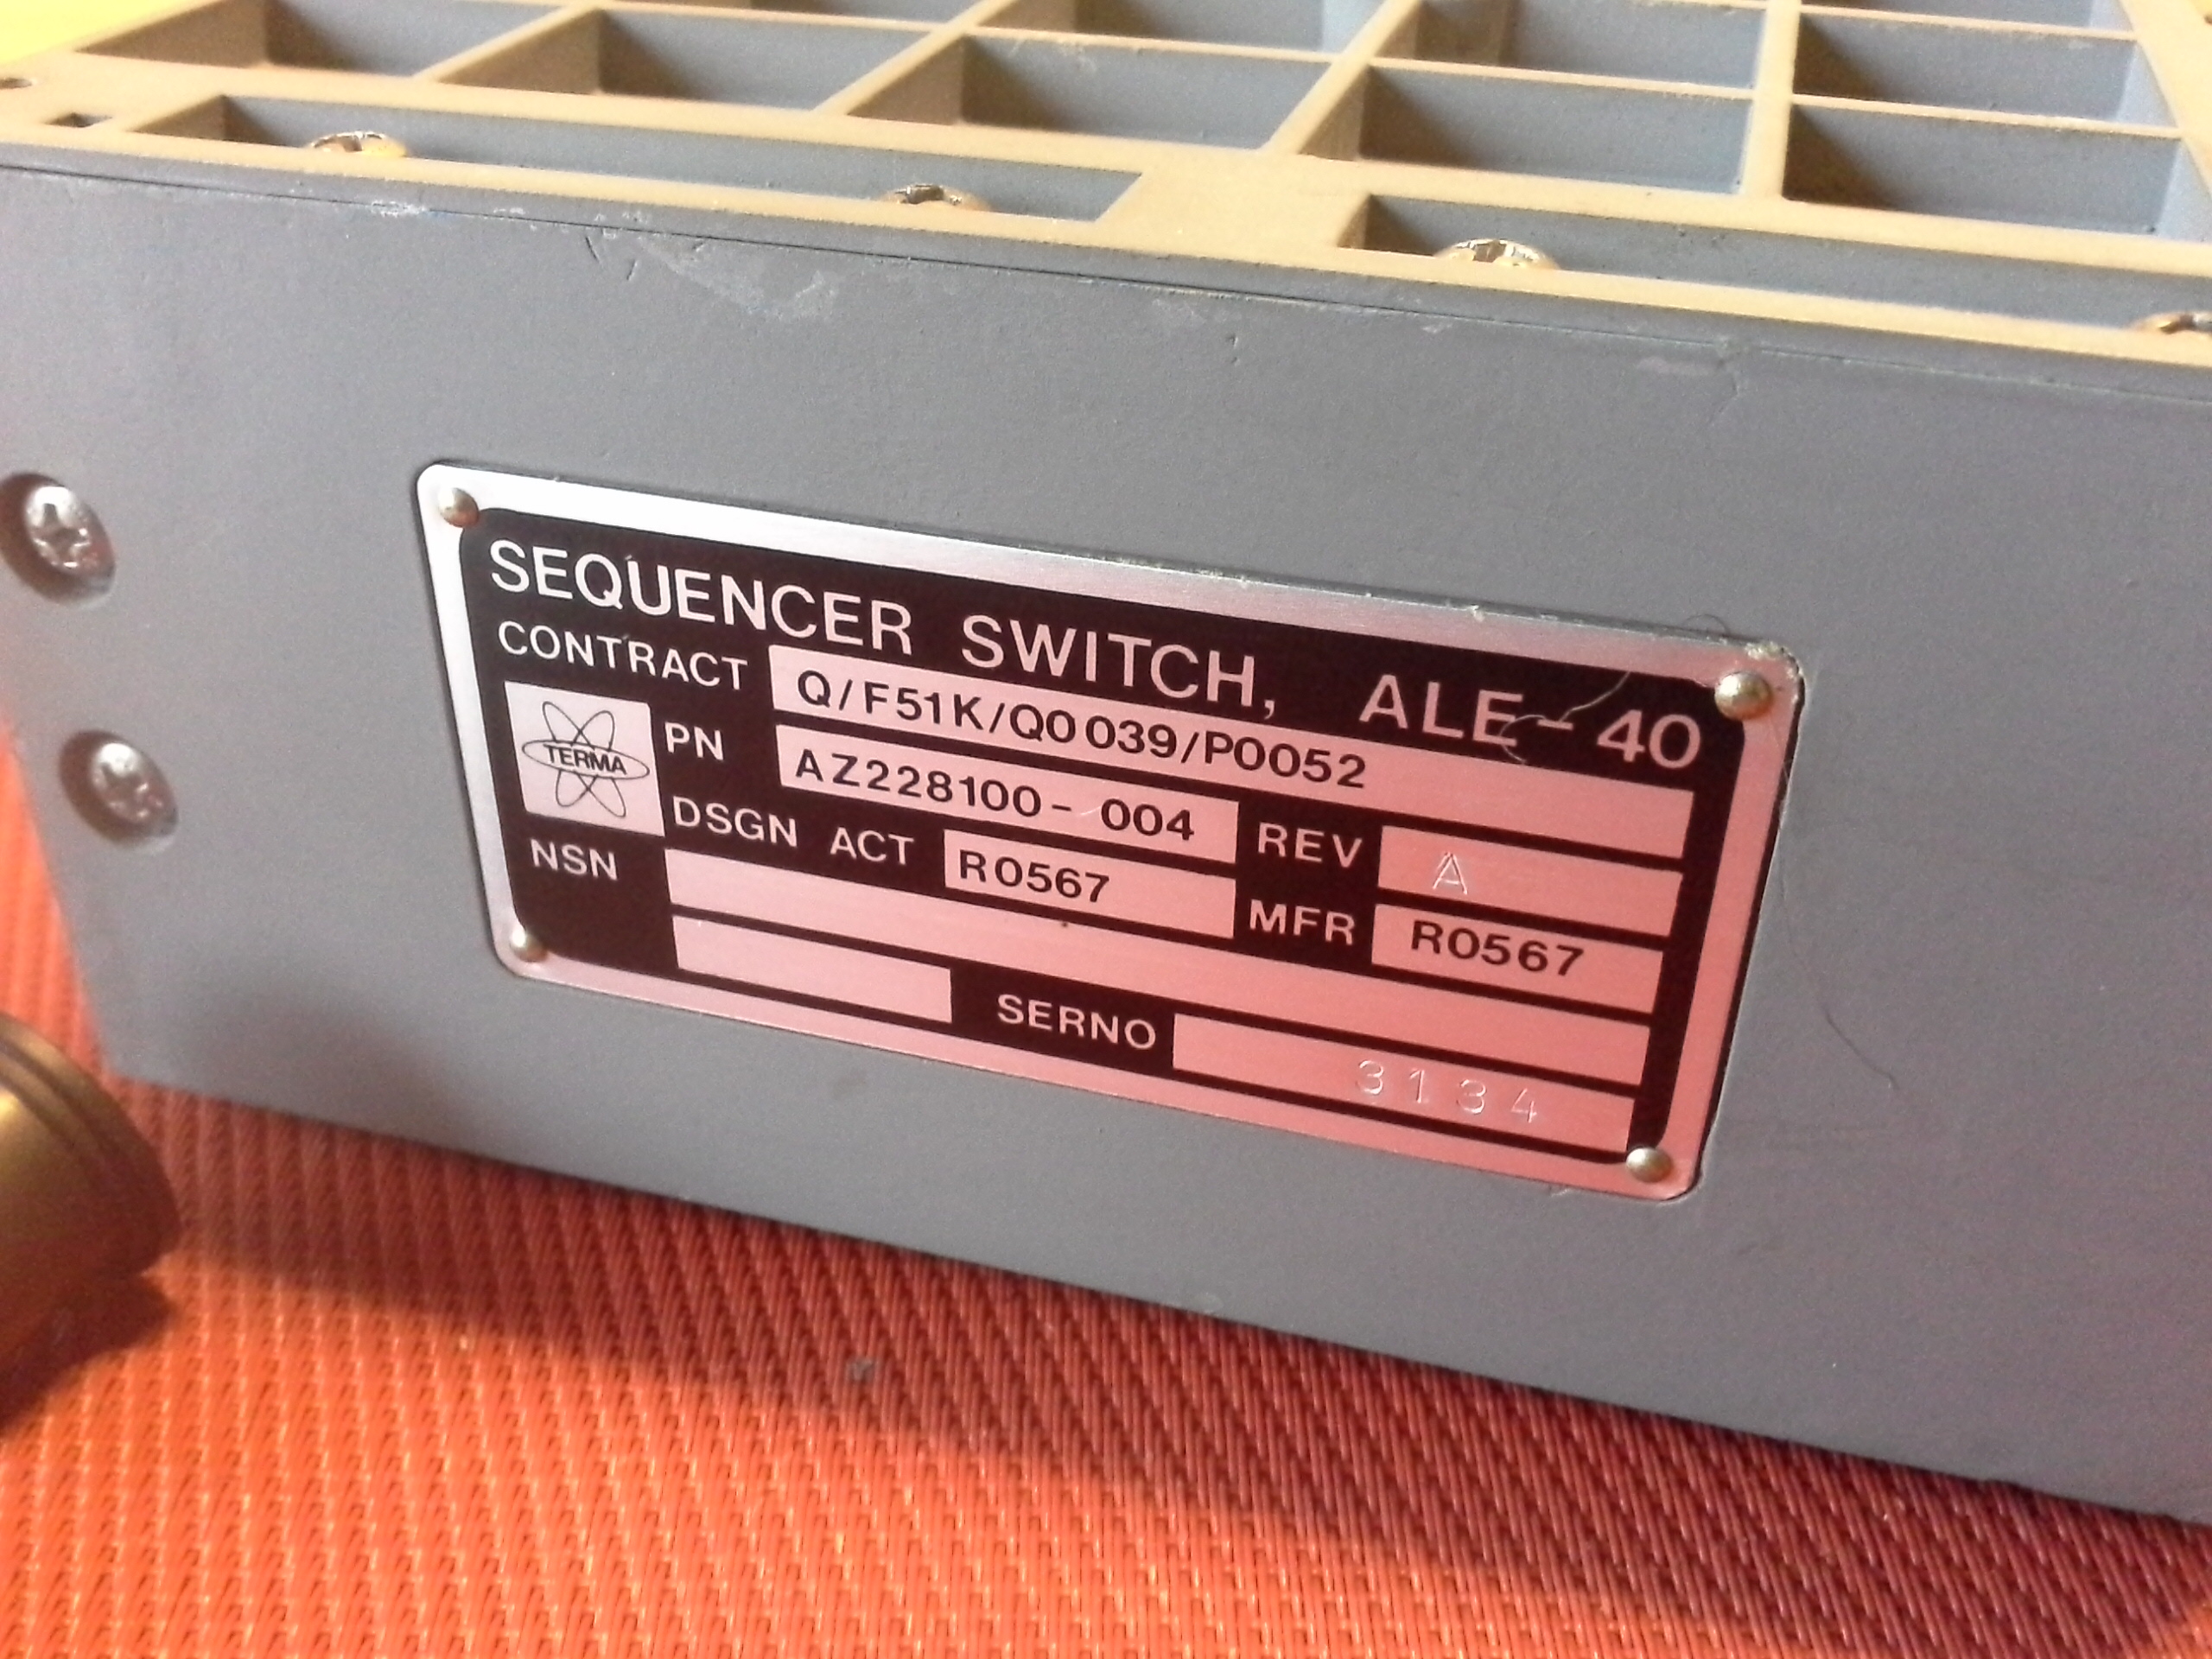 Sequenzer Switch, ALE-40 Flugzeug, Transall C-160